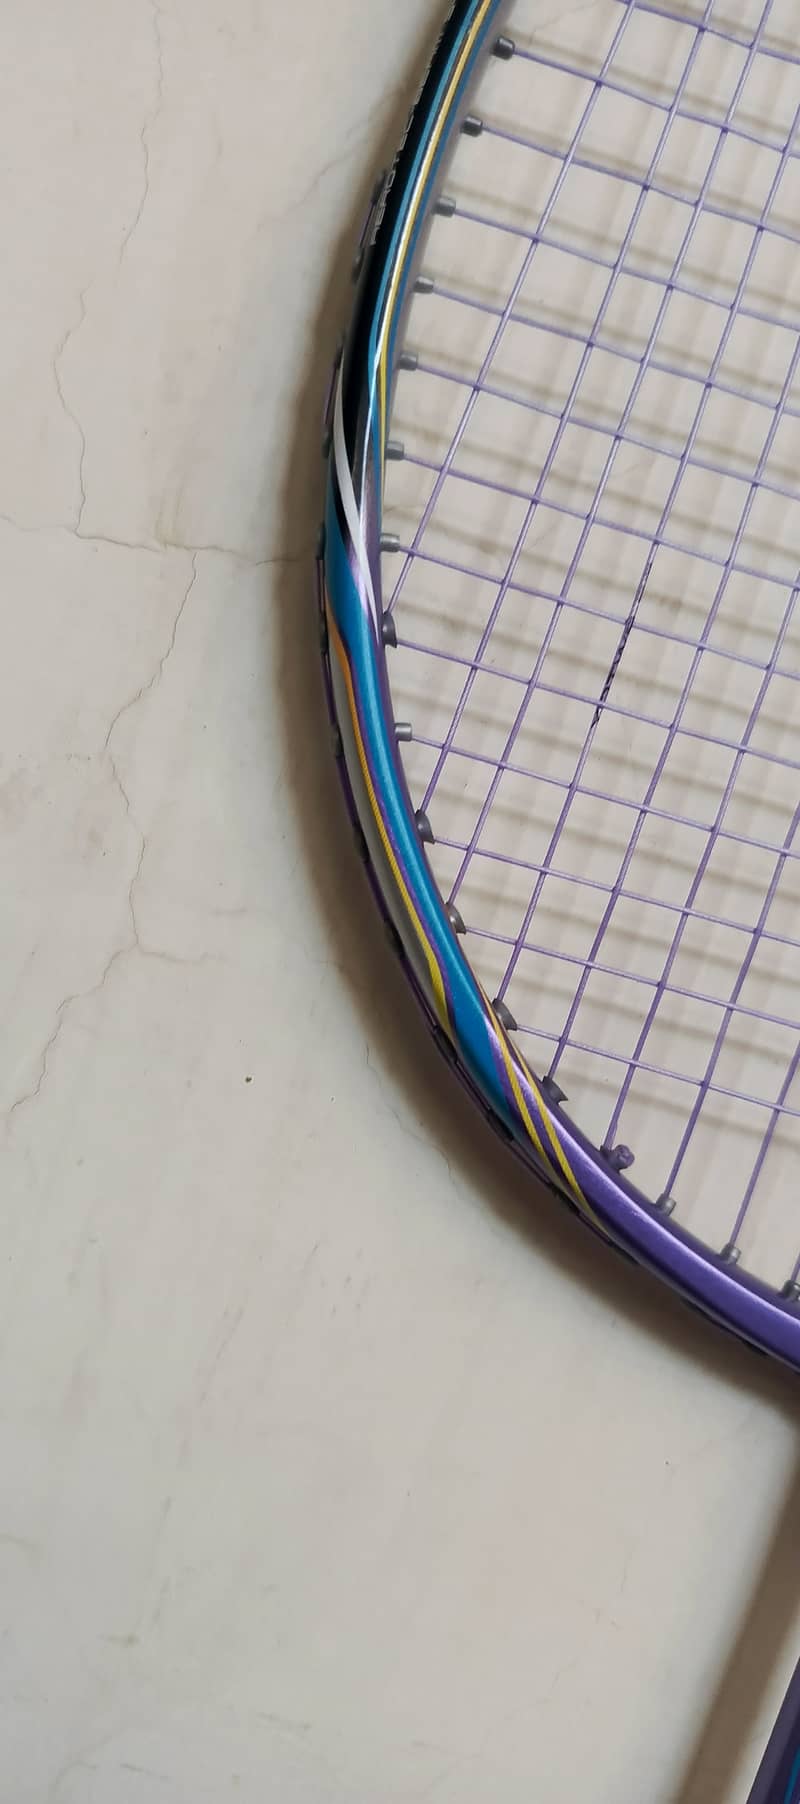 LI-NING HC 1900 Purple | Badminton Racket | Carbon Frame racket 9